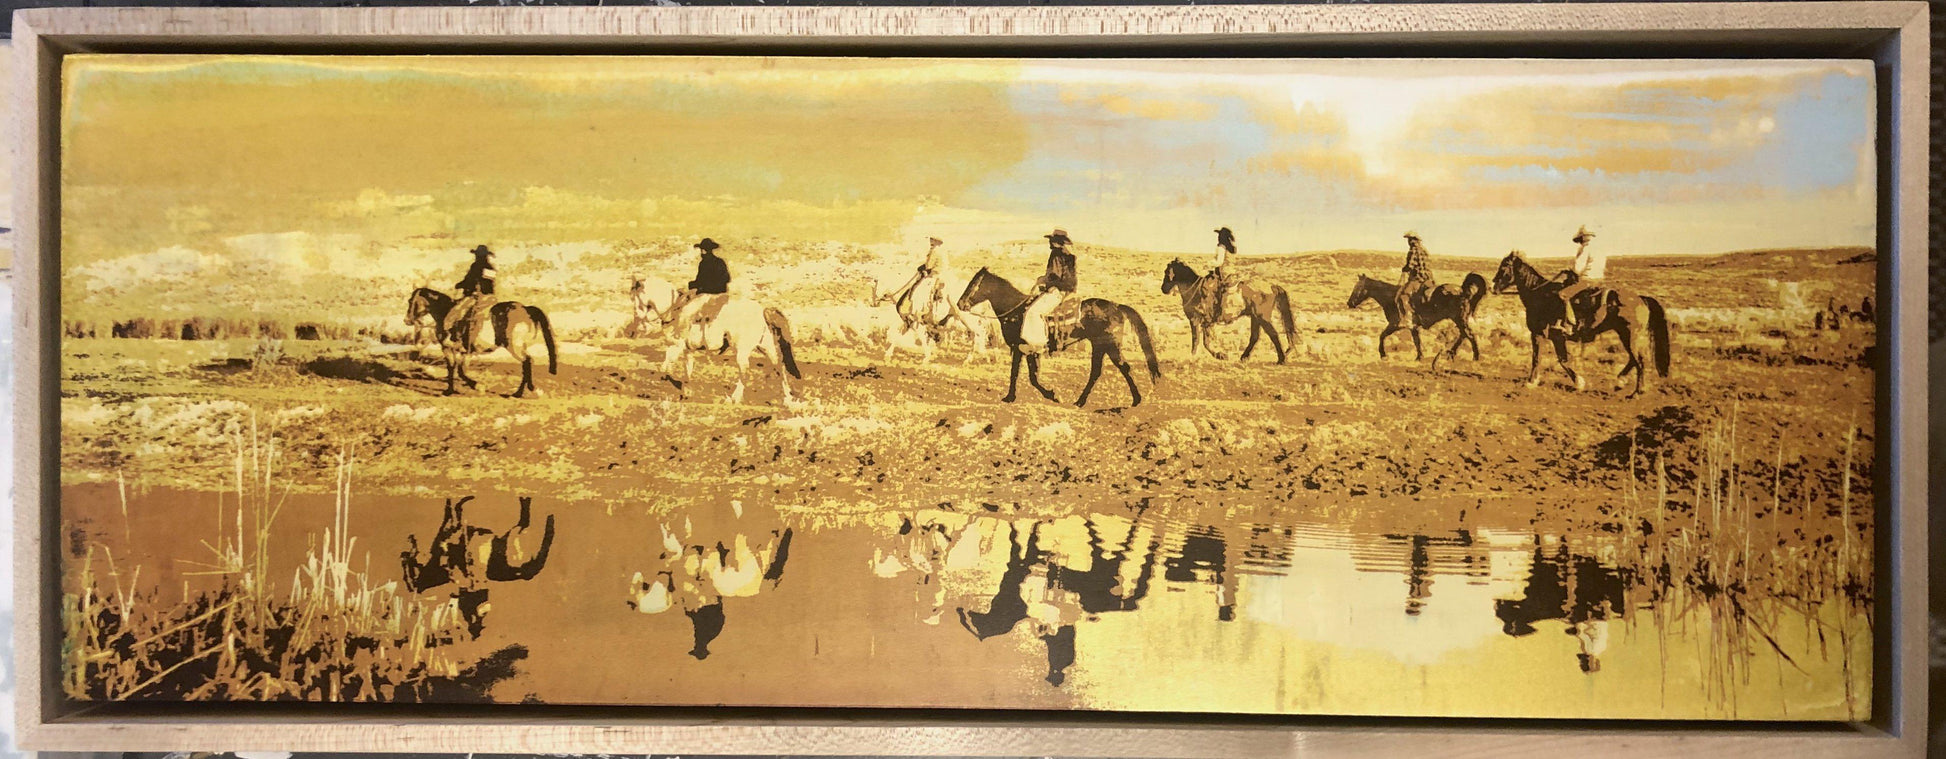 Golden Hour | Along The River-Painting-Maura Allen-Sorrel Sky Gallery